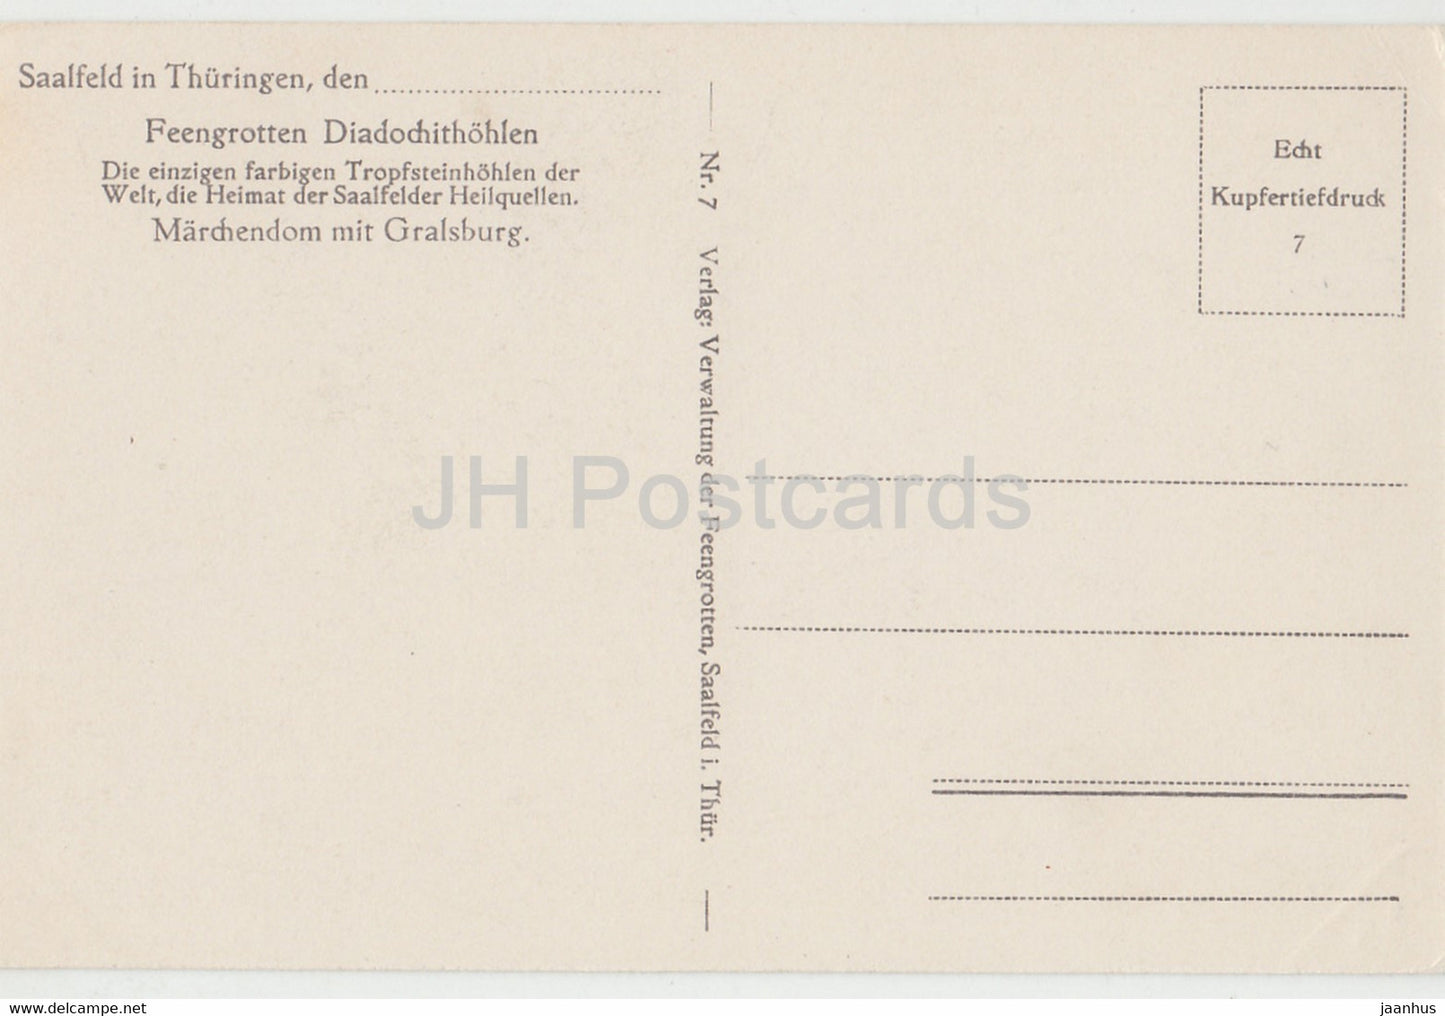 Saalfeld à Thuringen - Feengrotten - Marchendom mit Gralsburg - grotte - 7 - carte postale ancienne - Allemagne - inutilisée